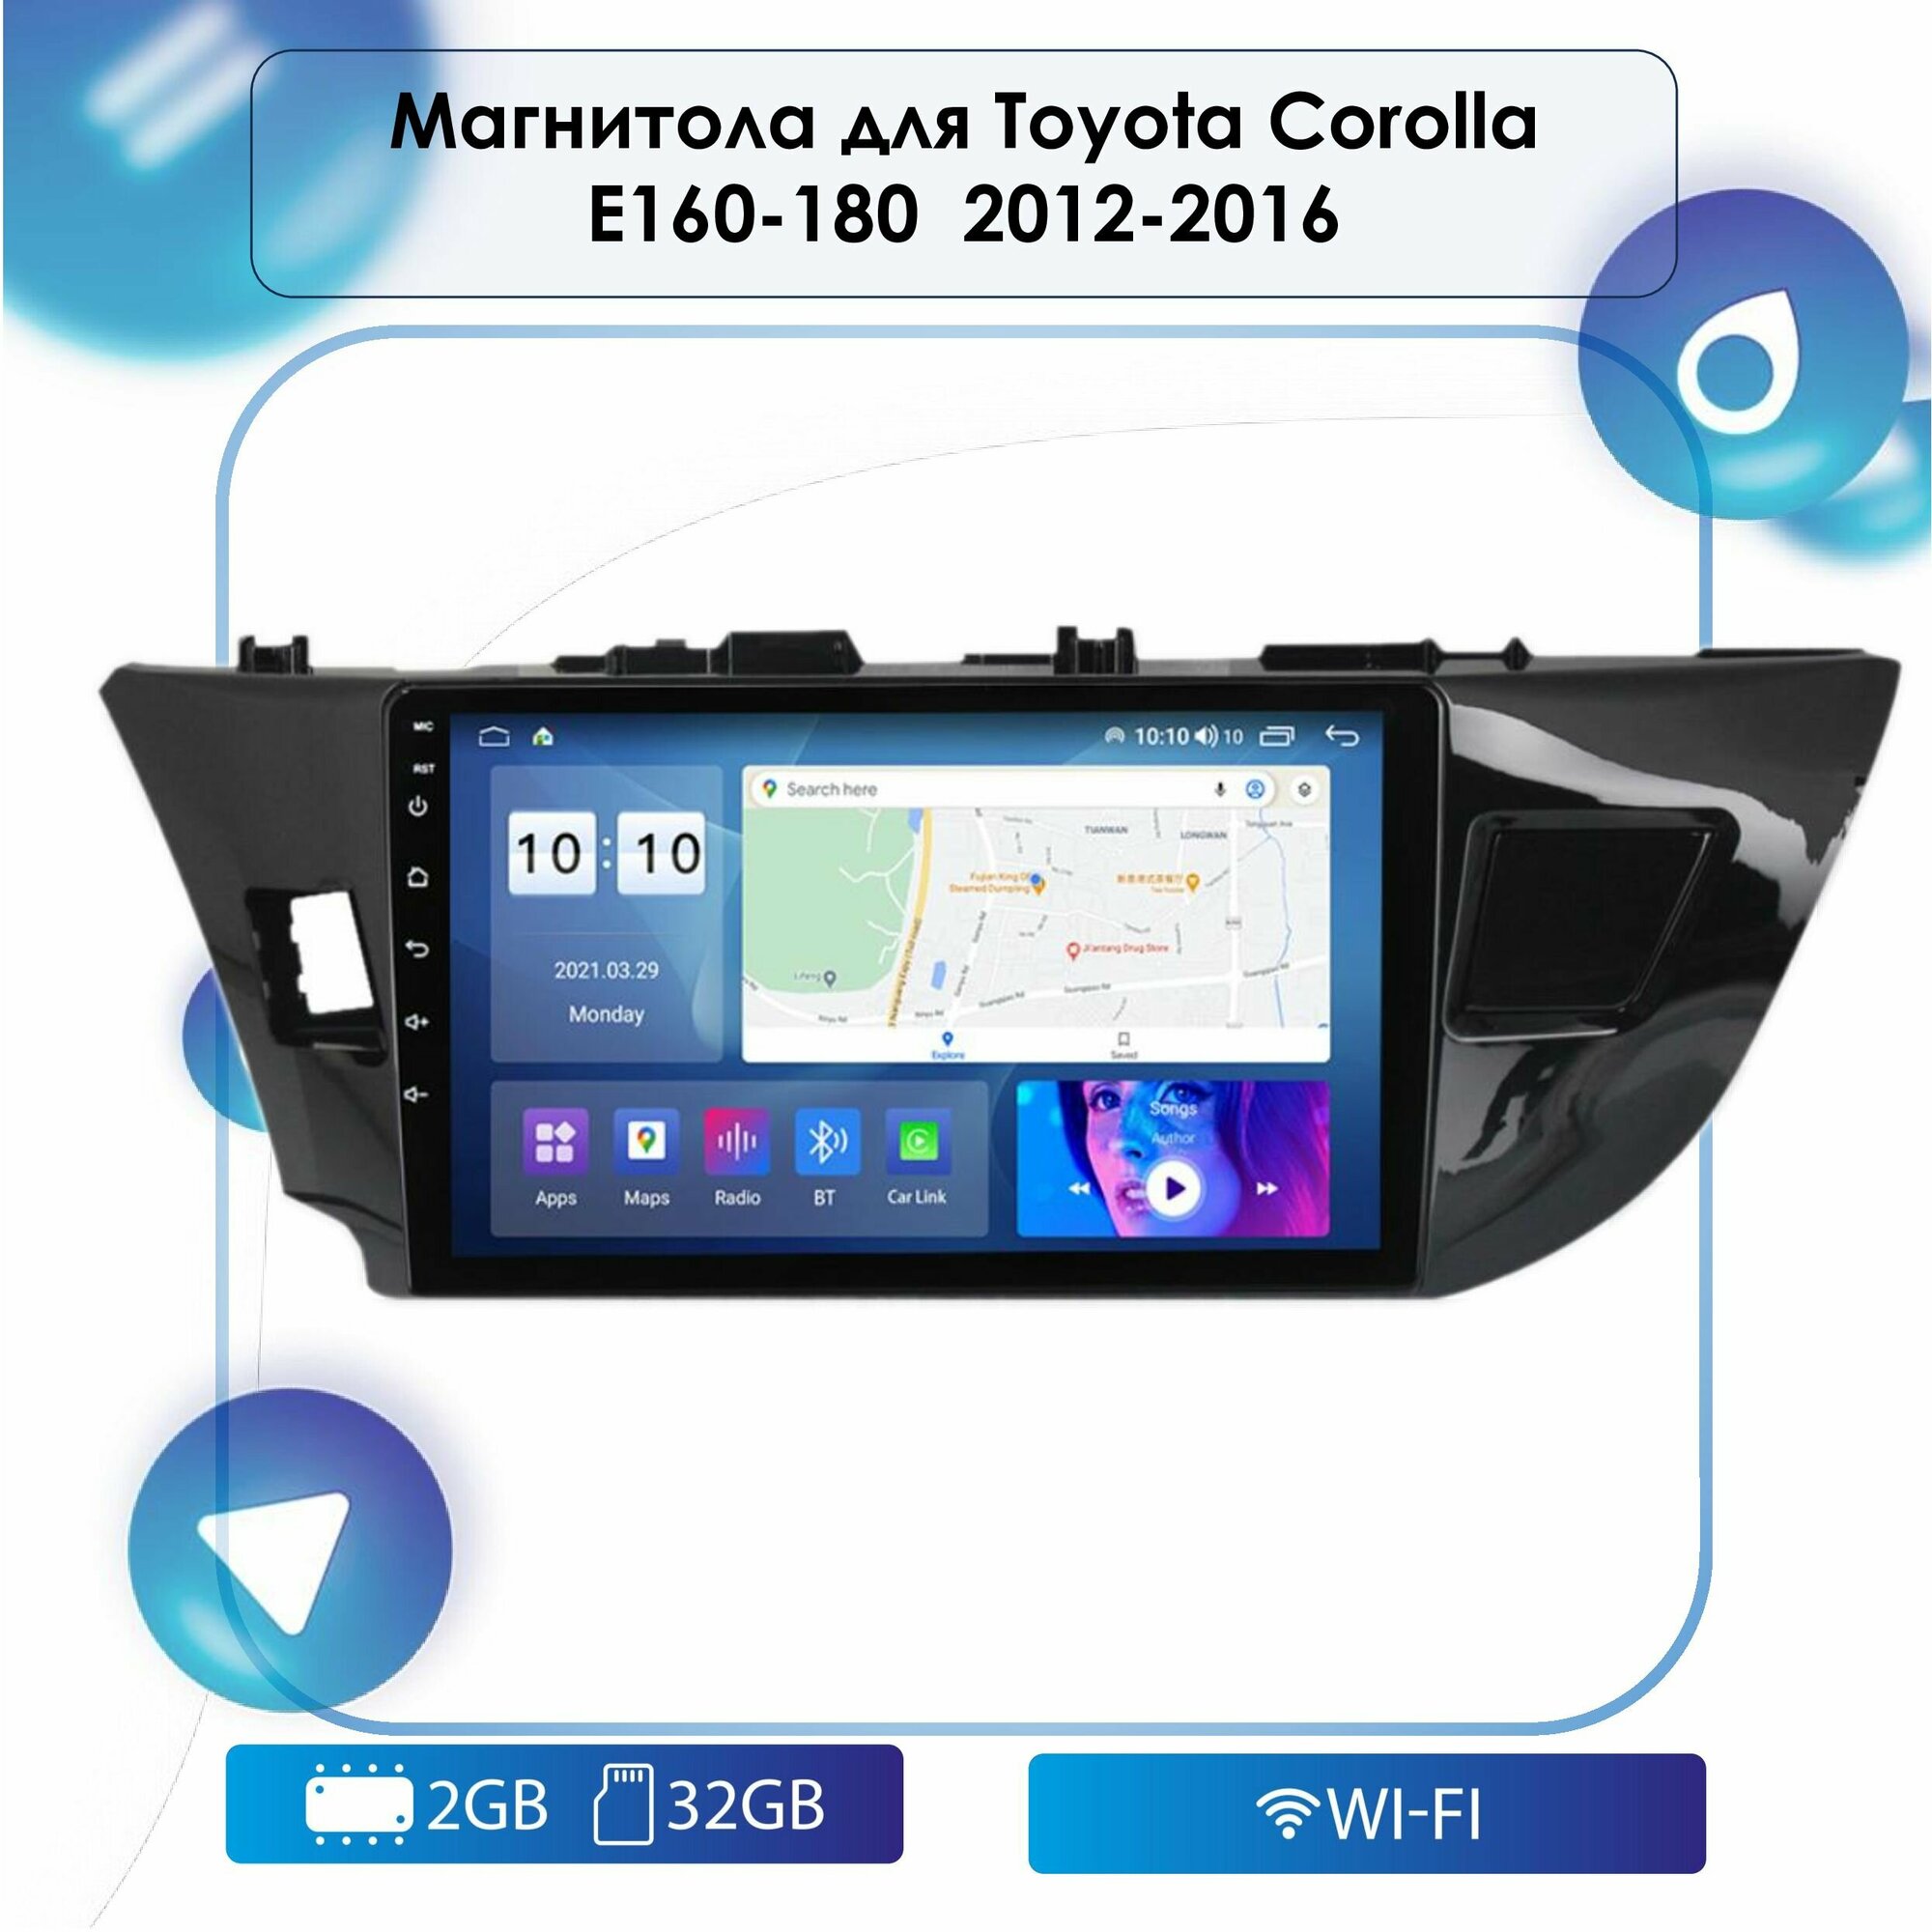 Автомагнитола для Toyota Corolla E160-180 2012-2016 Android, 2-32 Wi-Fi, Bluetooth, GPS, Эквалайзер, Мульти-руль